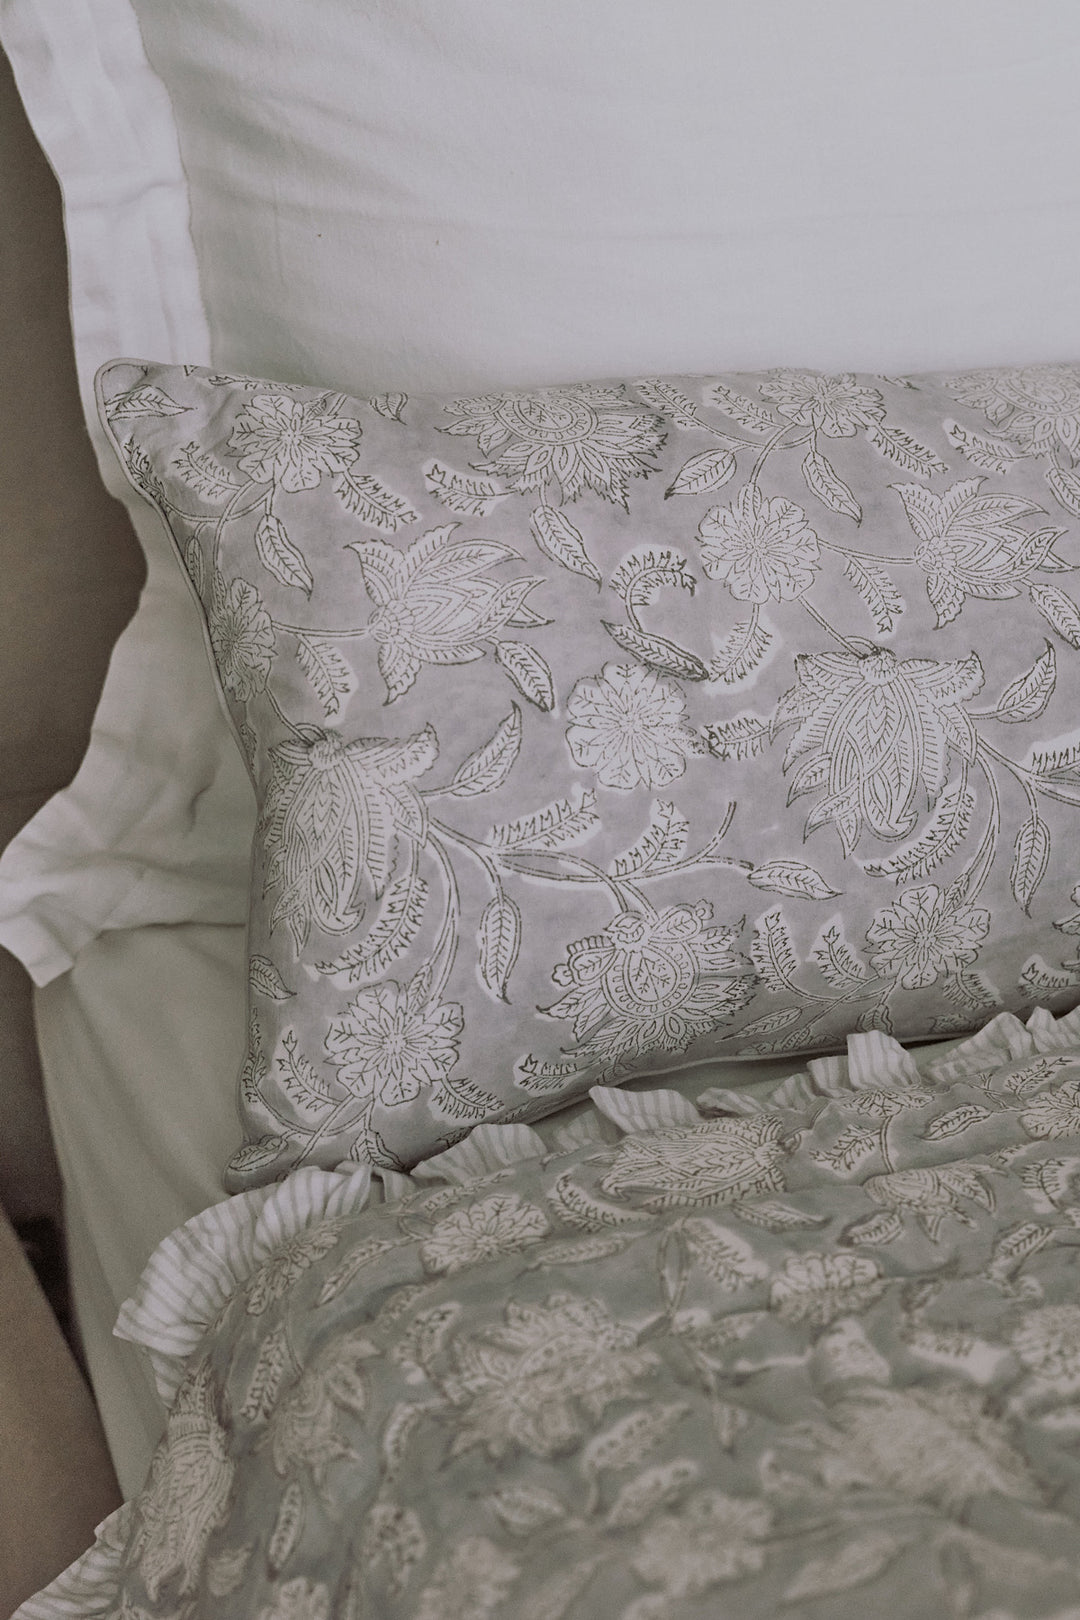 Champaca Rectangle Cushion In Lunar Grey